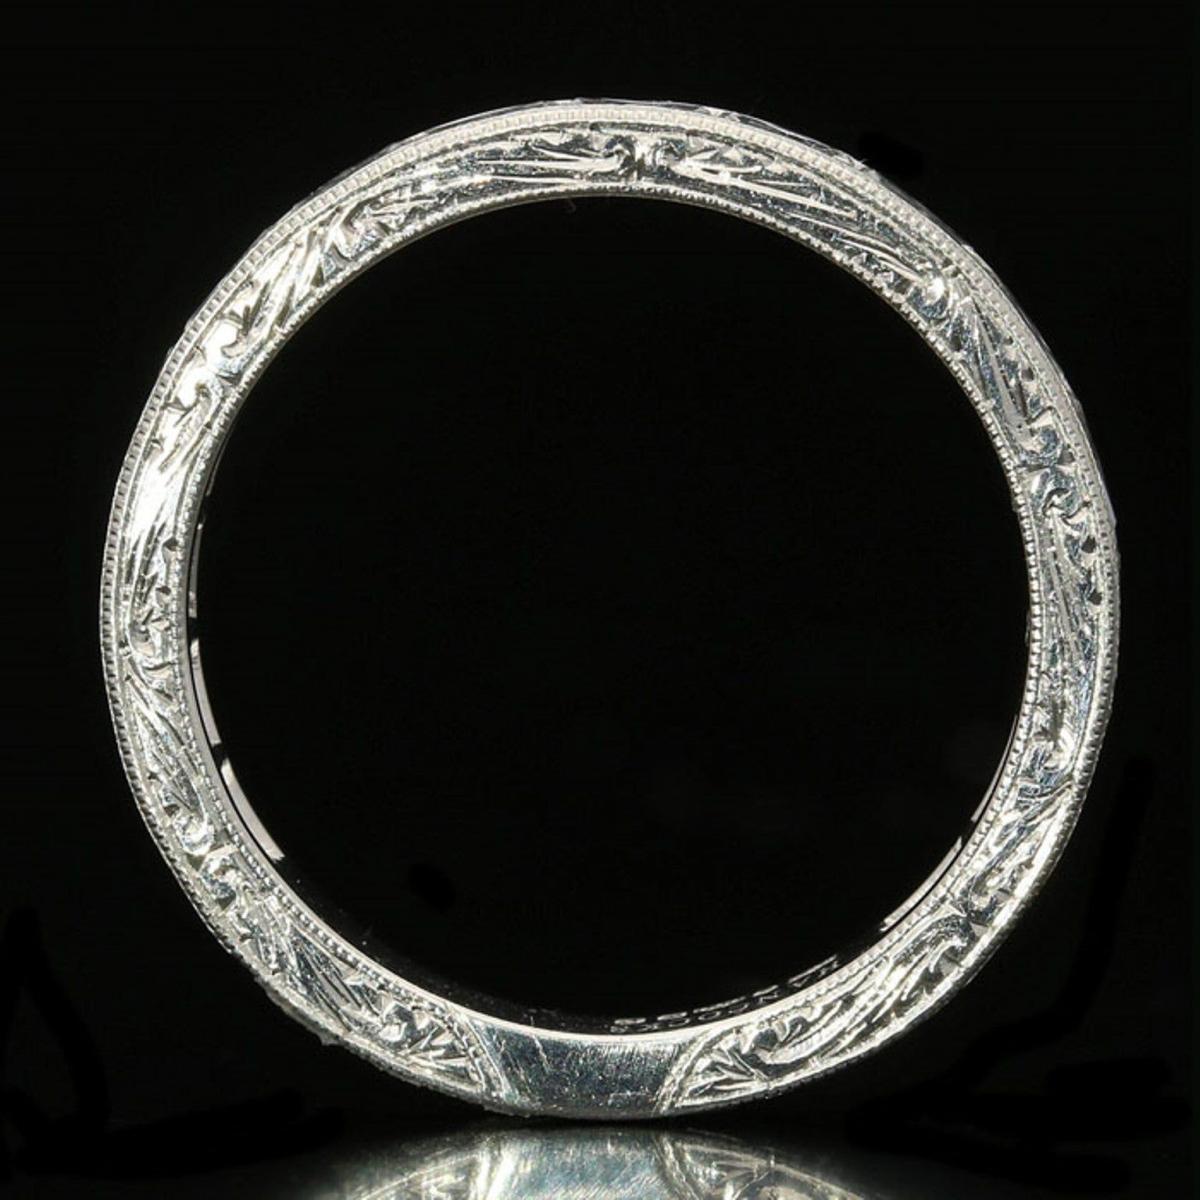 Hancocks “East or West” French Cut Diamond Platinum Eternity Ring